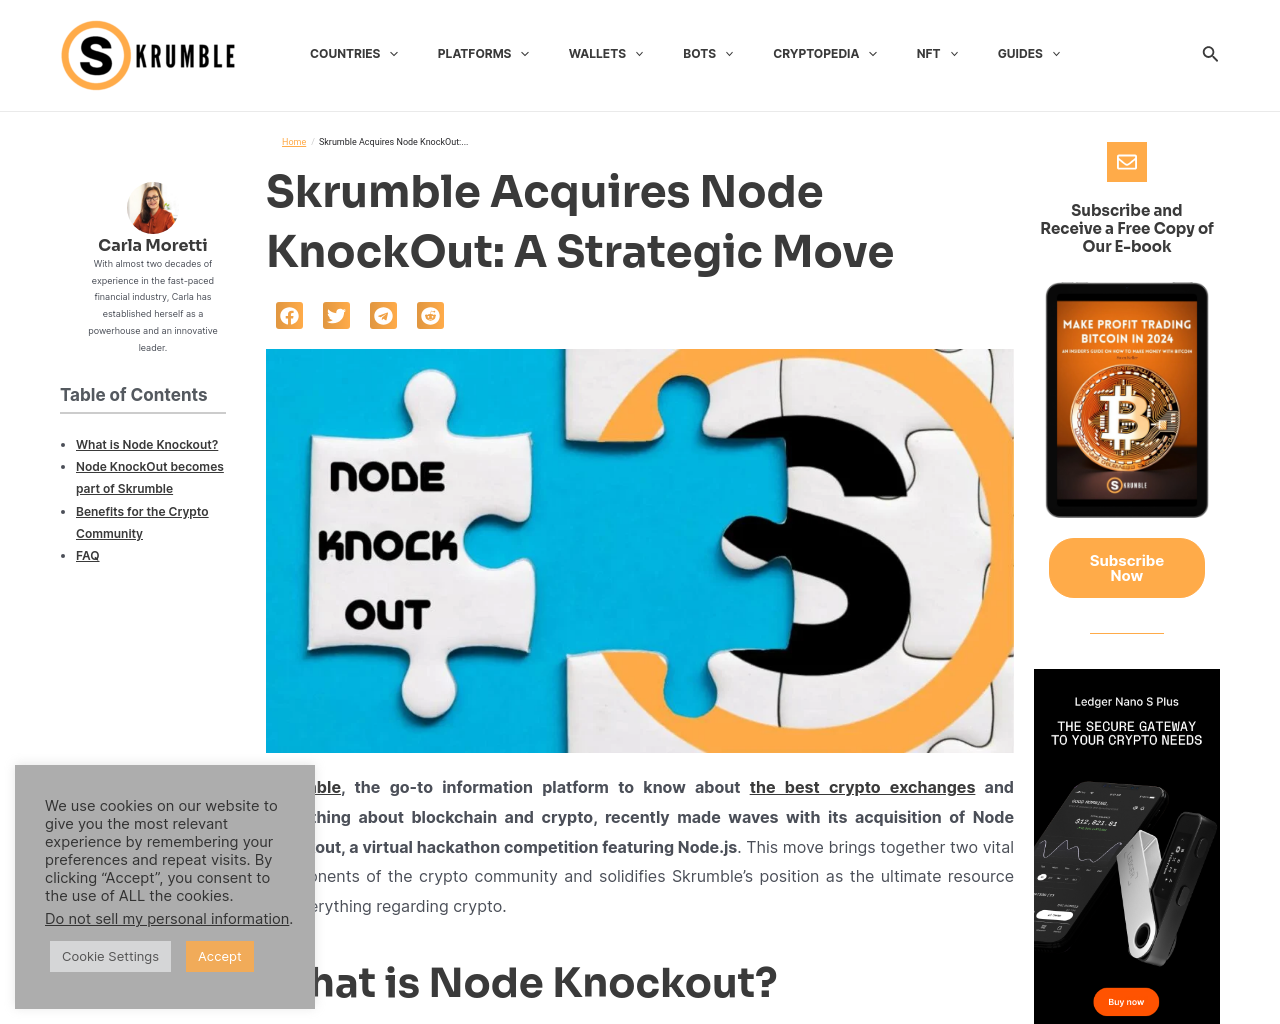 nodeknockout.com